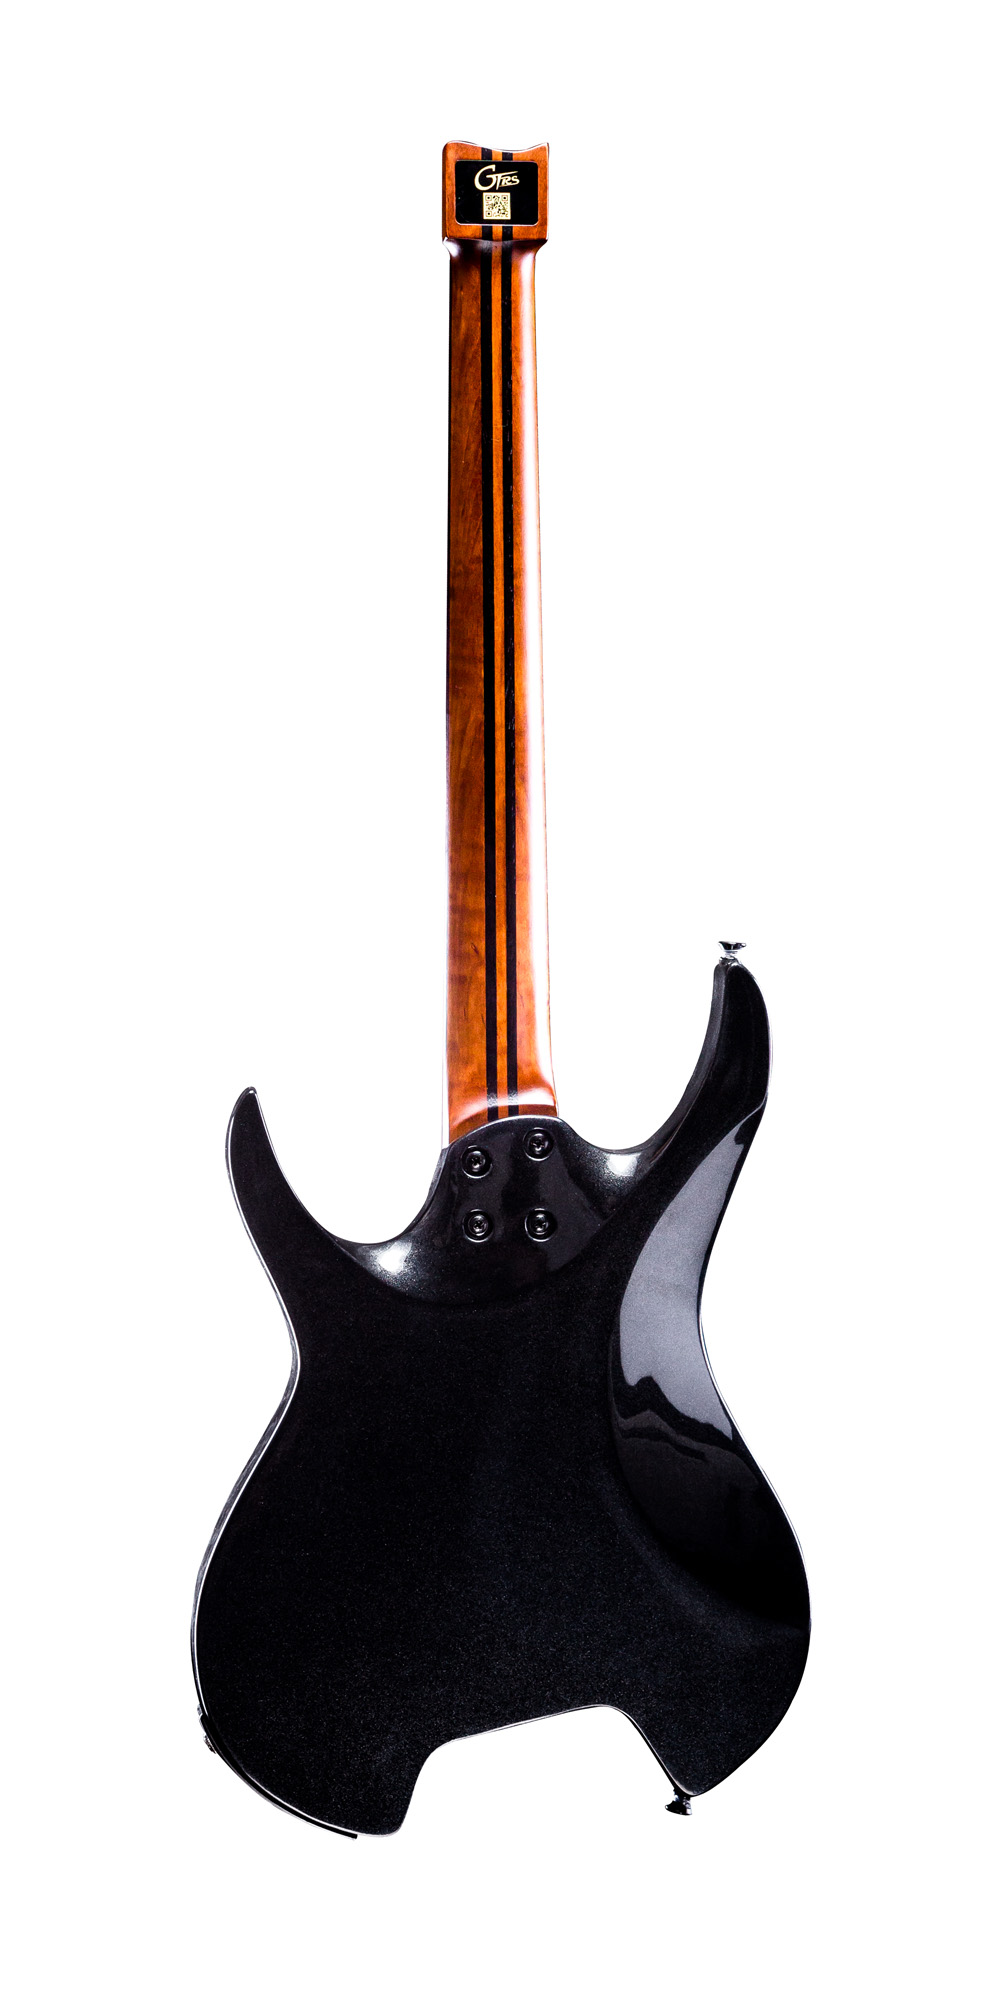 Mooer Gtrs W800 Pro Intelligent Guitar Hh Ht Rw - Pearl Black - Guitarra eléctrica de modelización - Variation 1